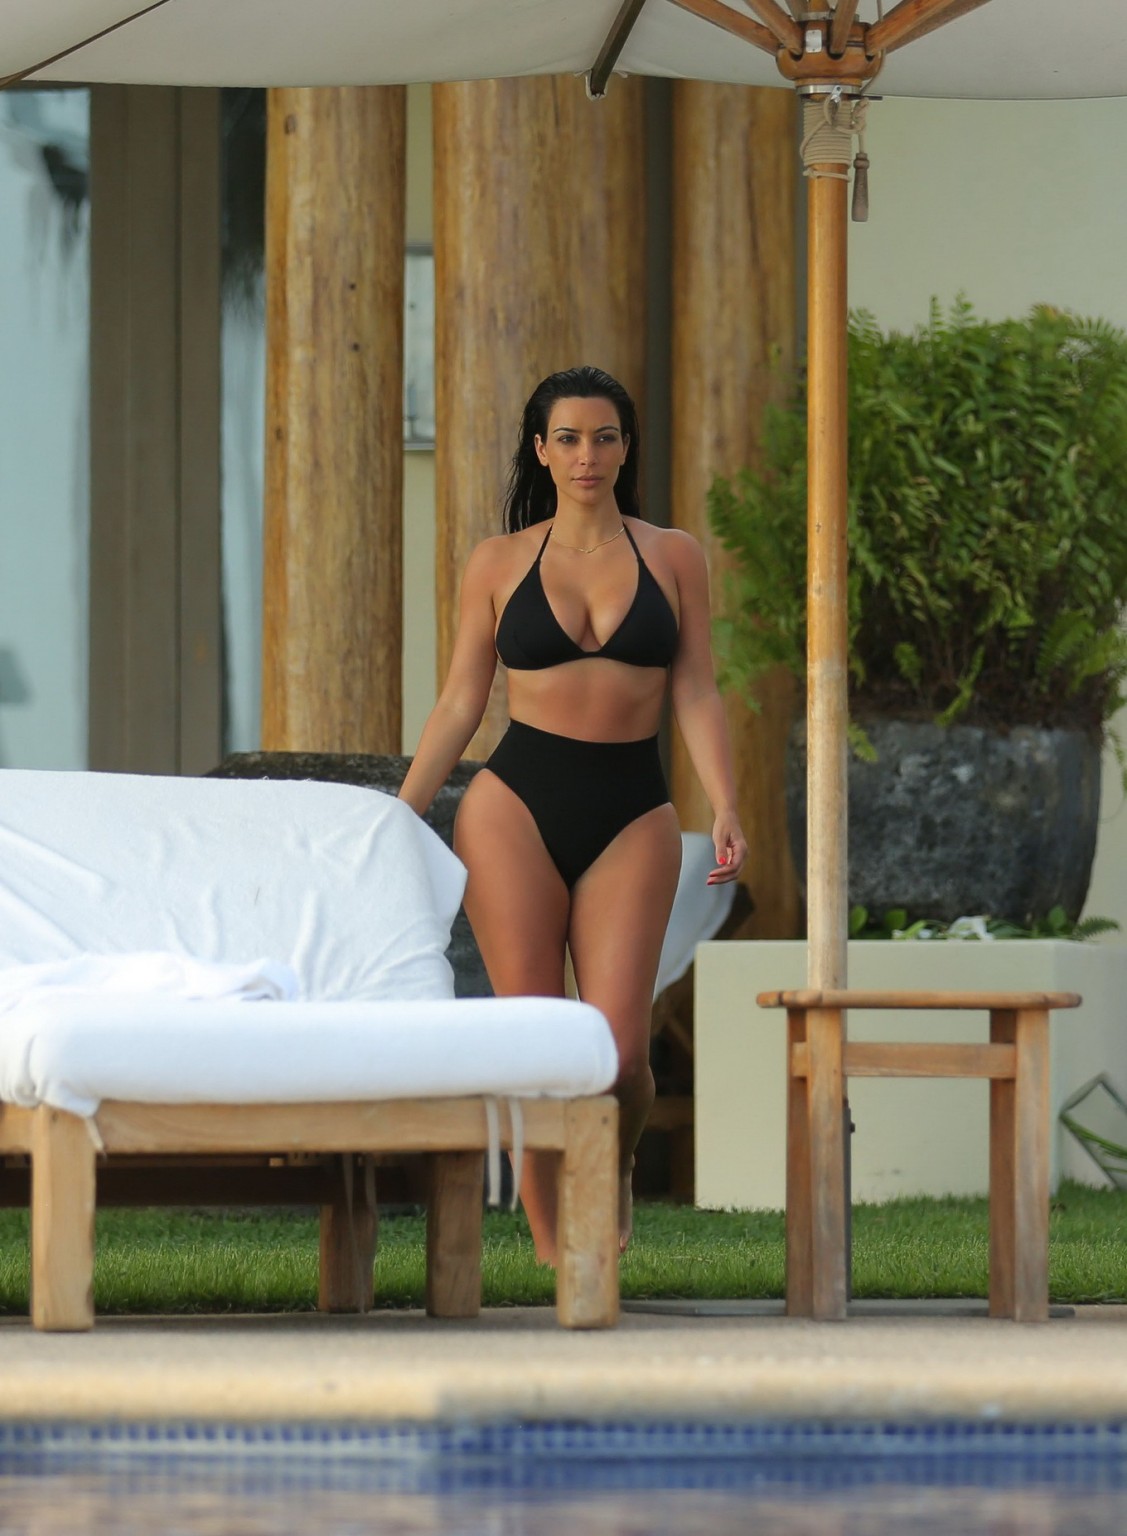 Kim Kardashian shows off her curvy body in a skimpy black bikini at the pool in 